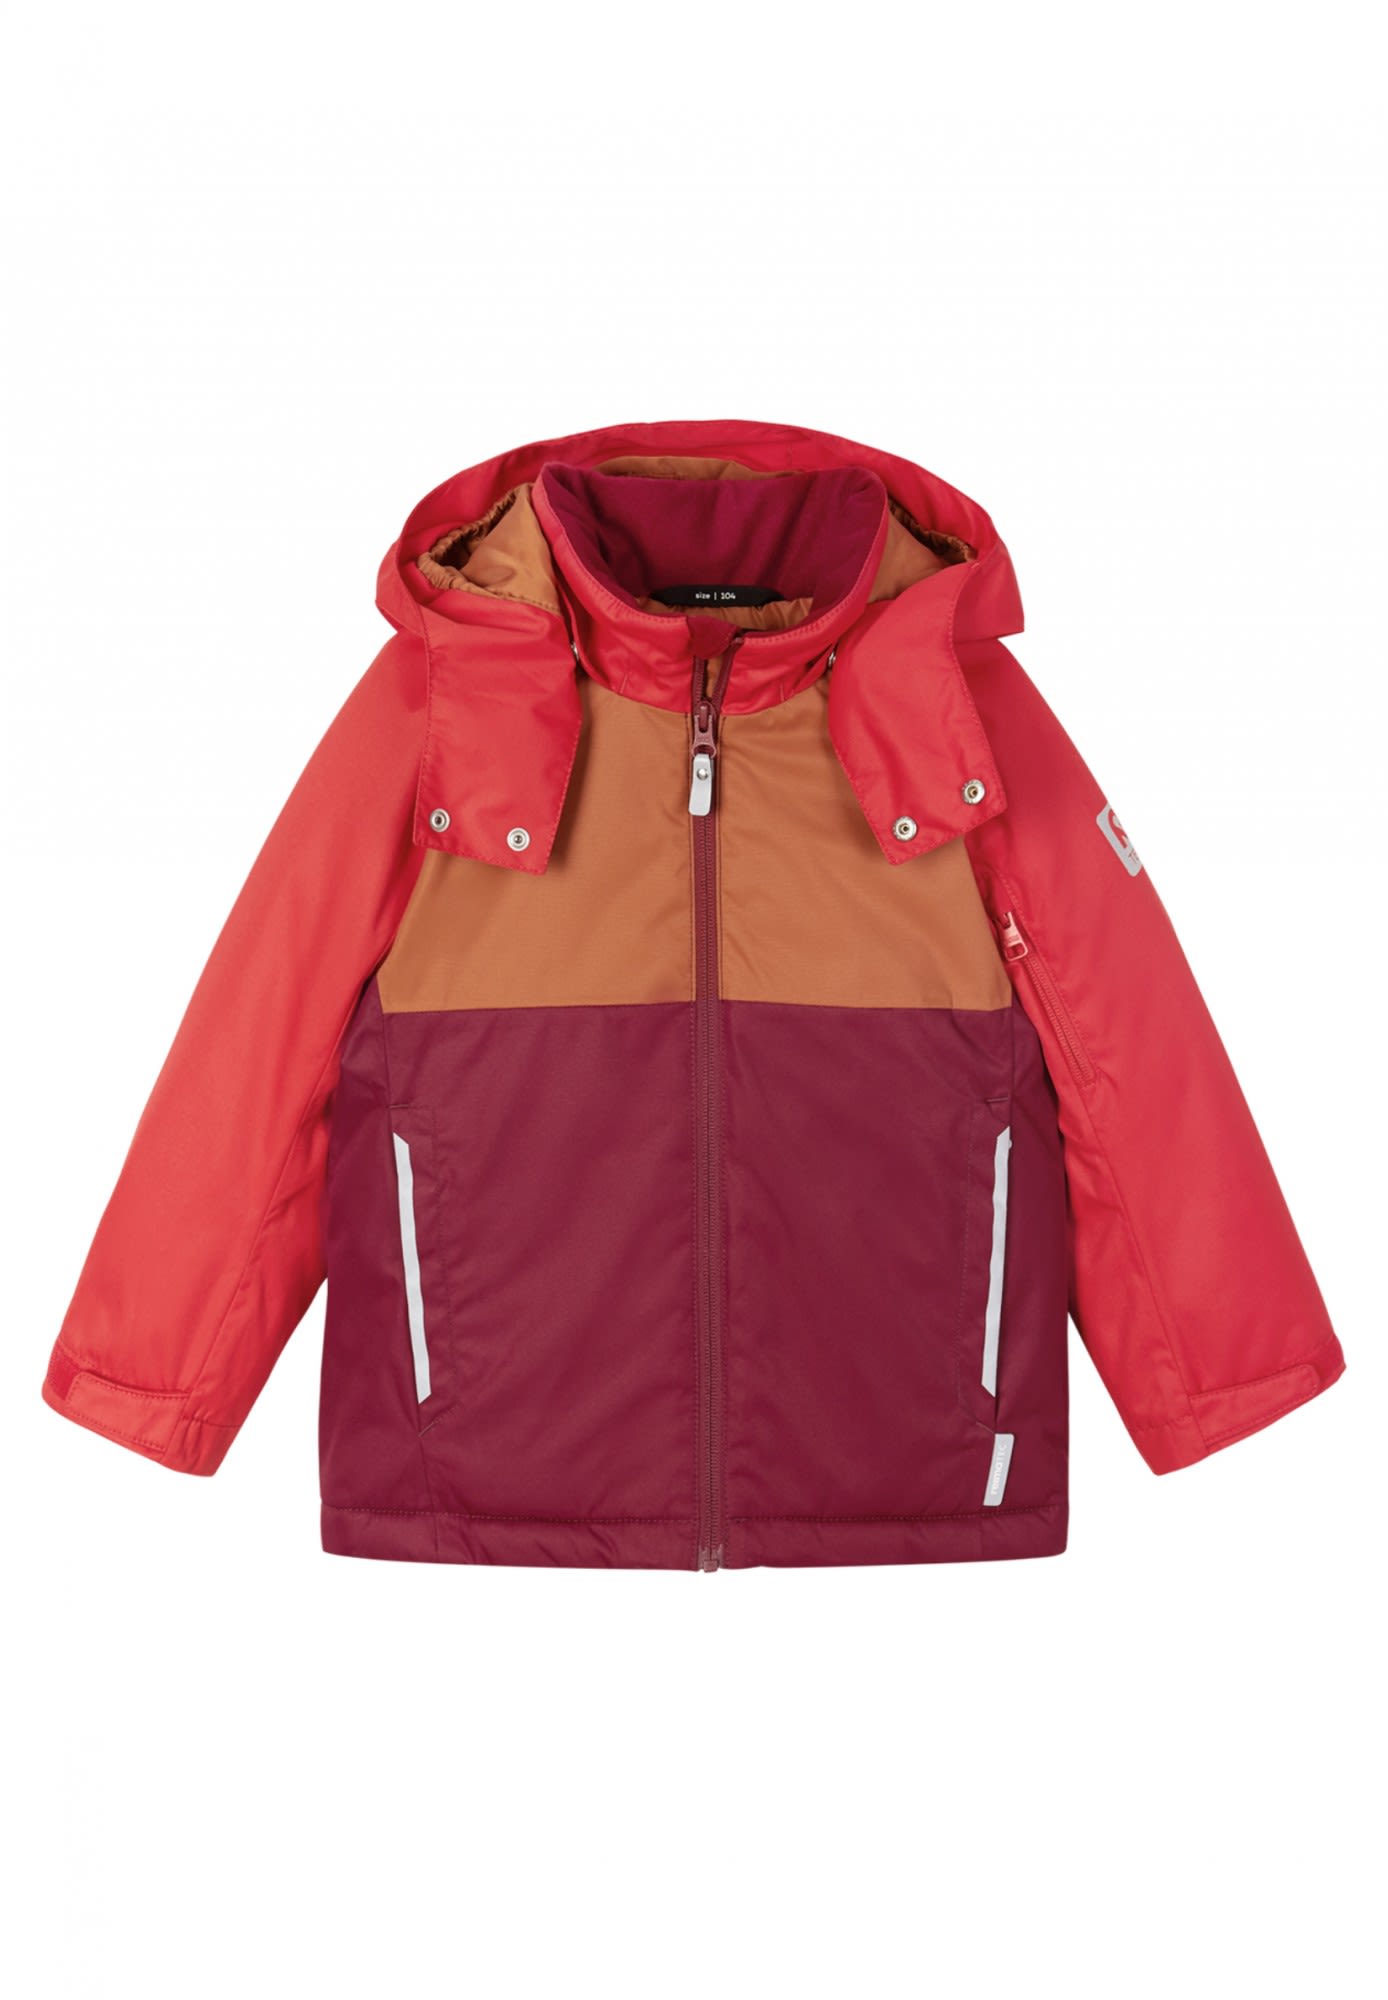 Reima Kids Karkkila Winter Jacket Colorblock / Rot | Größe 128 | Kinder Anorak